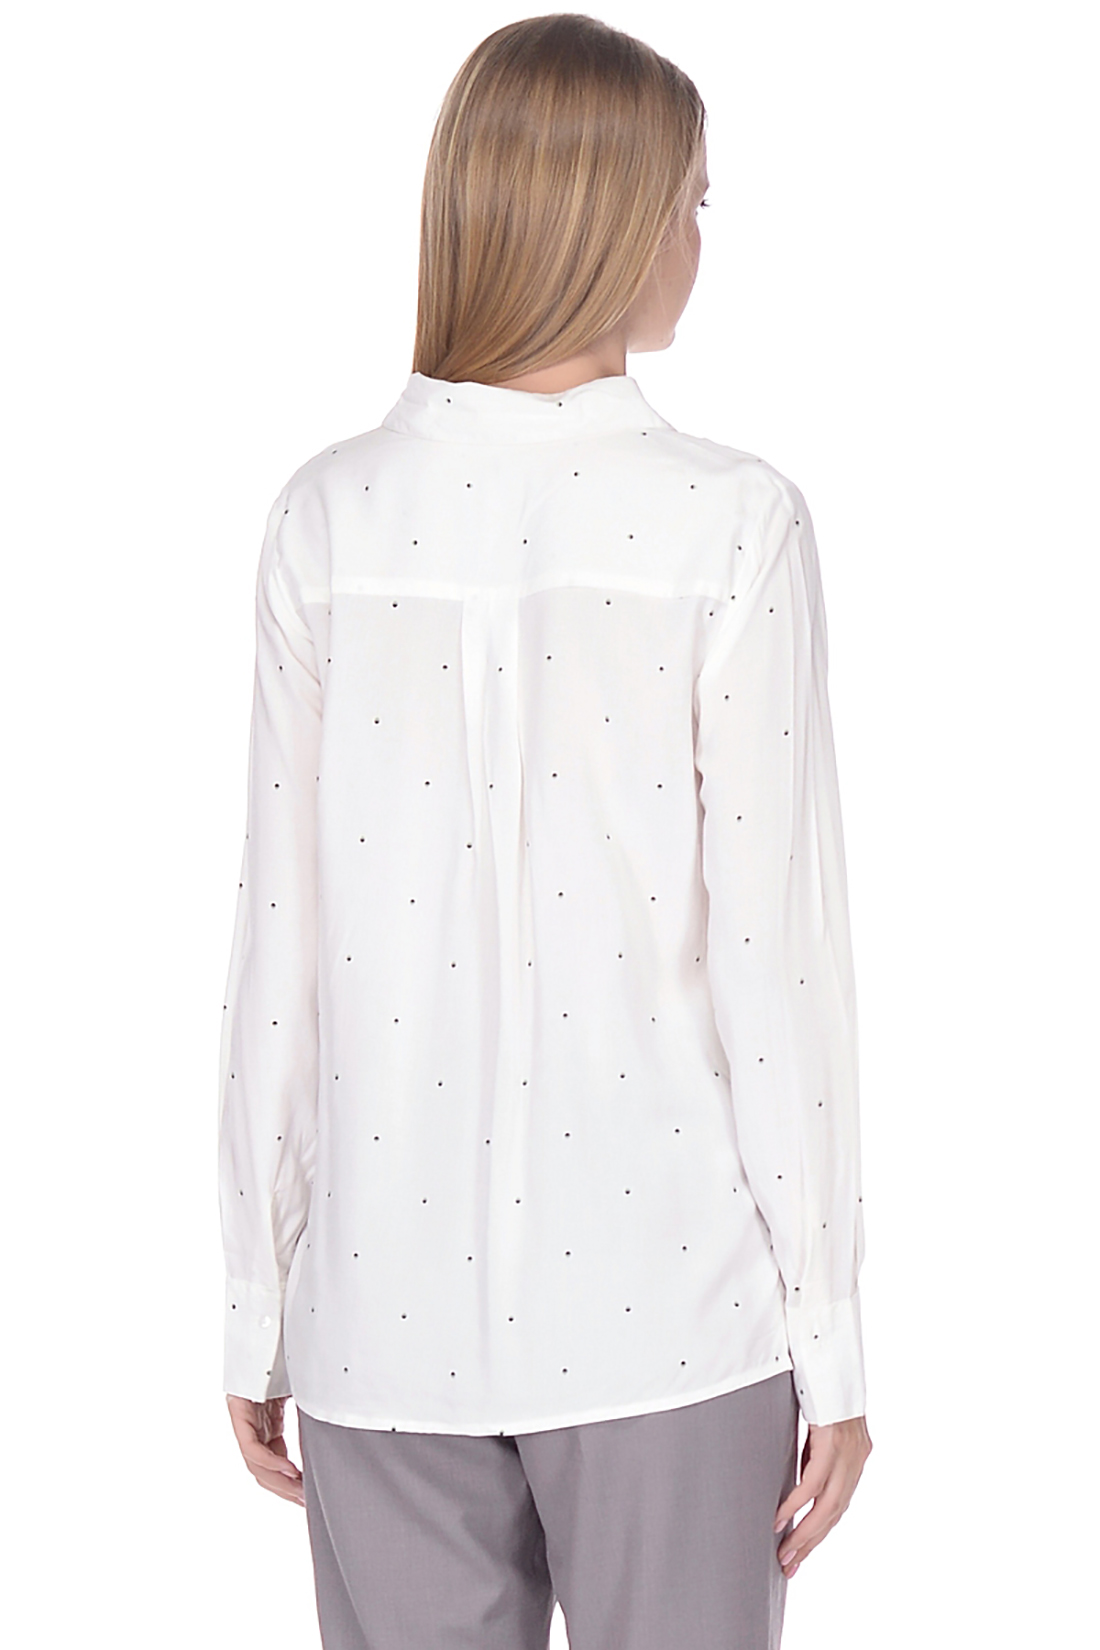 Блузка в мелкий горох (арт. baon B178056), размер XS, цвет white printed#белый Блузка в мелкий горох (арт. baon B178056) - фото 2